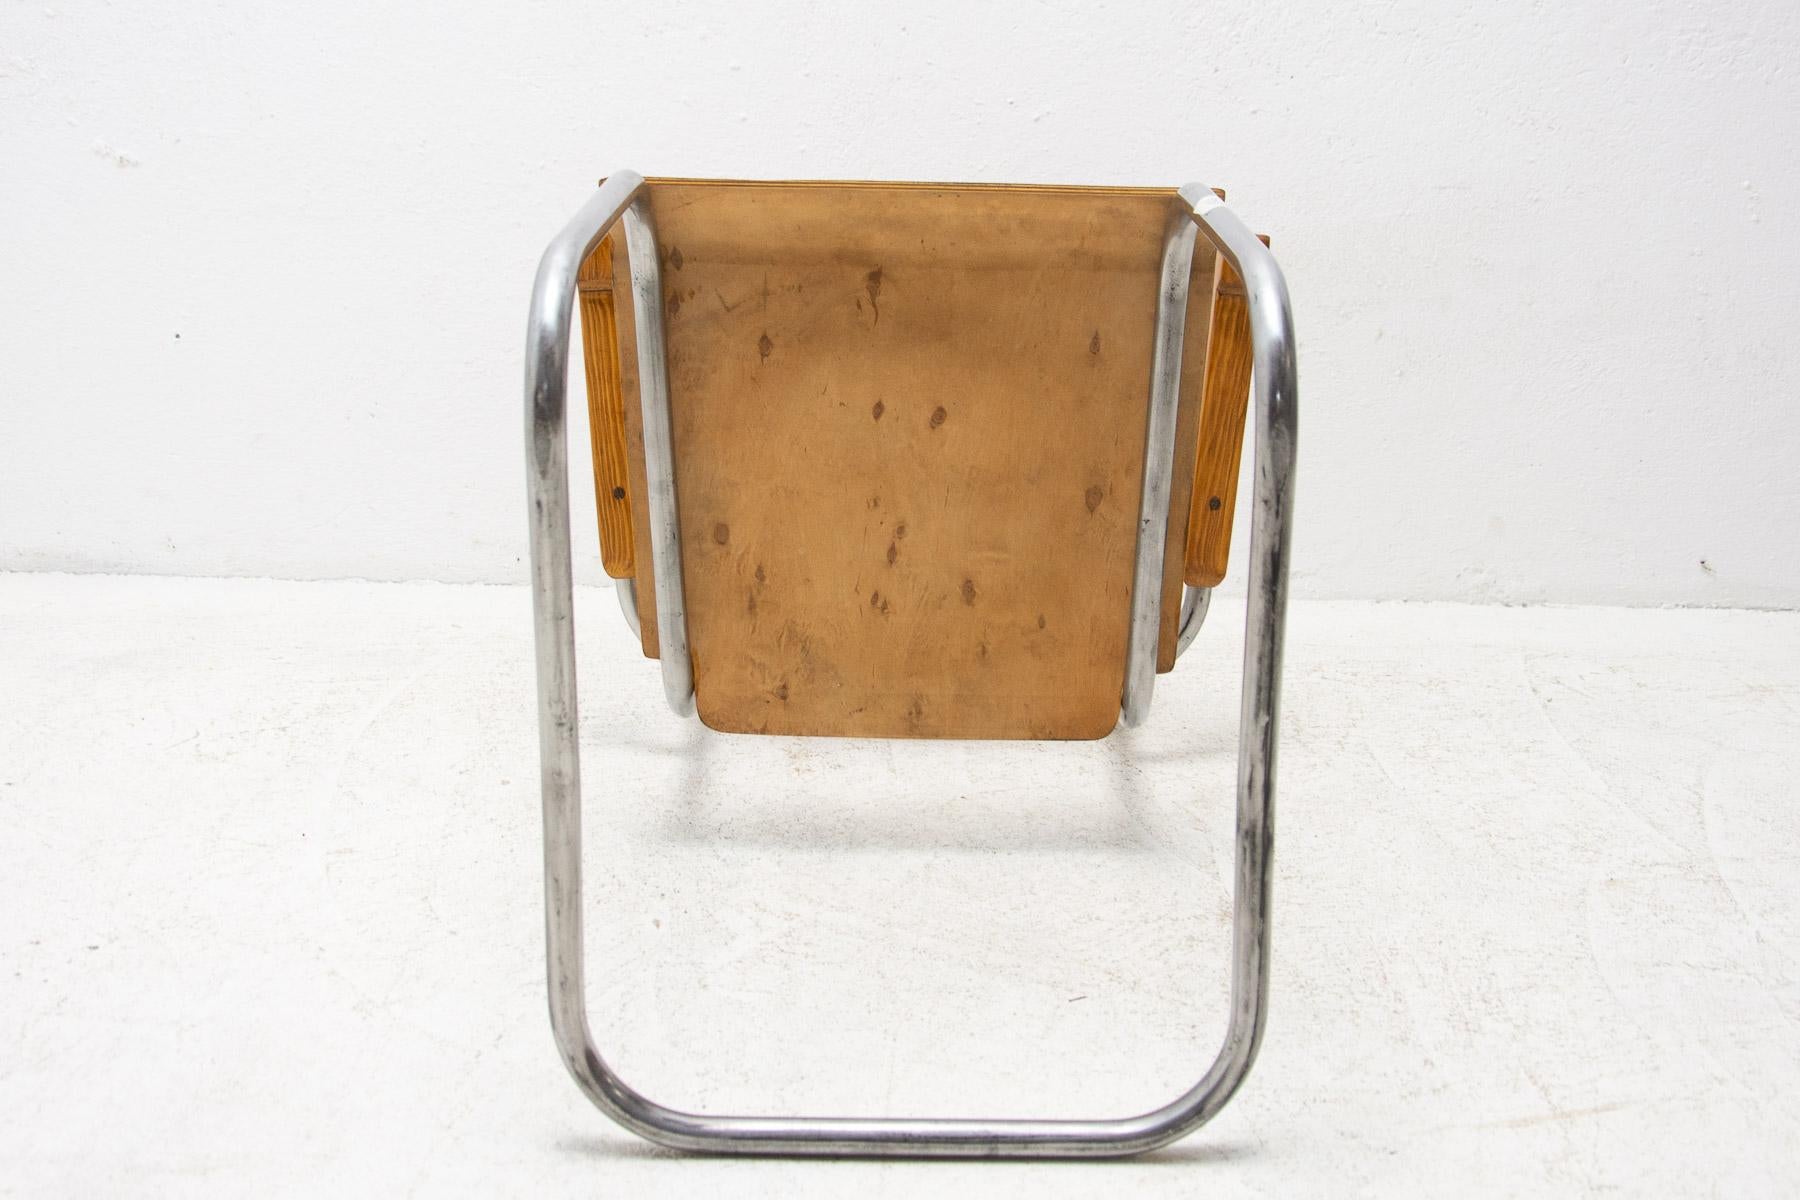 Modernist B43 Tabular Desk Chair by Mart Stam, 1950s For Sale 1